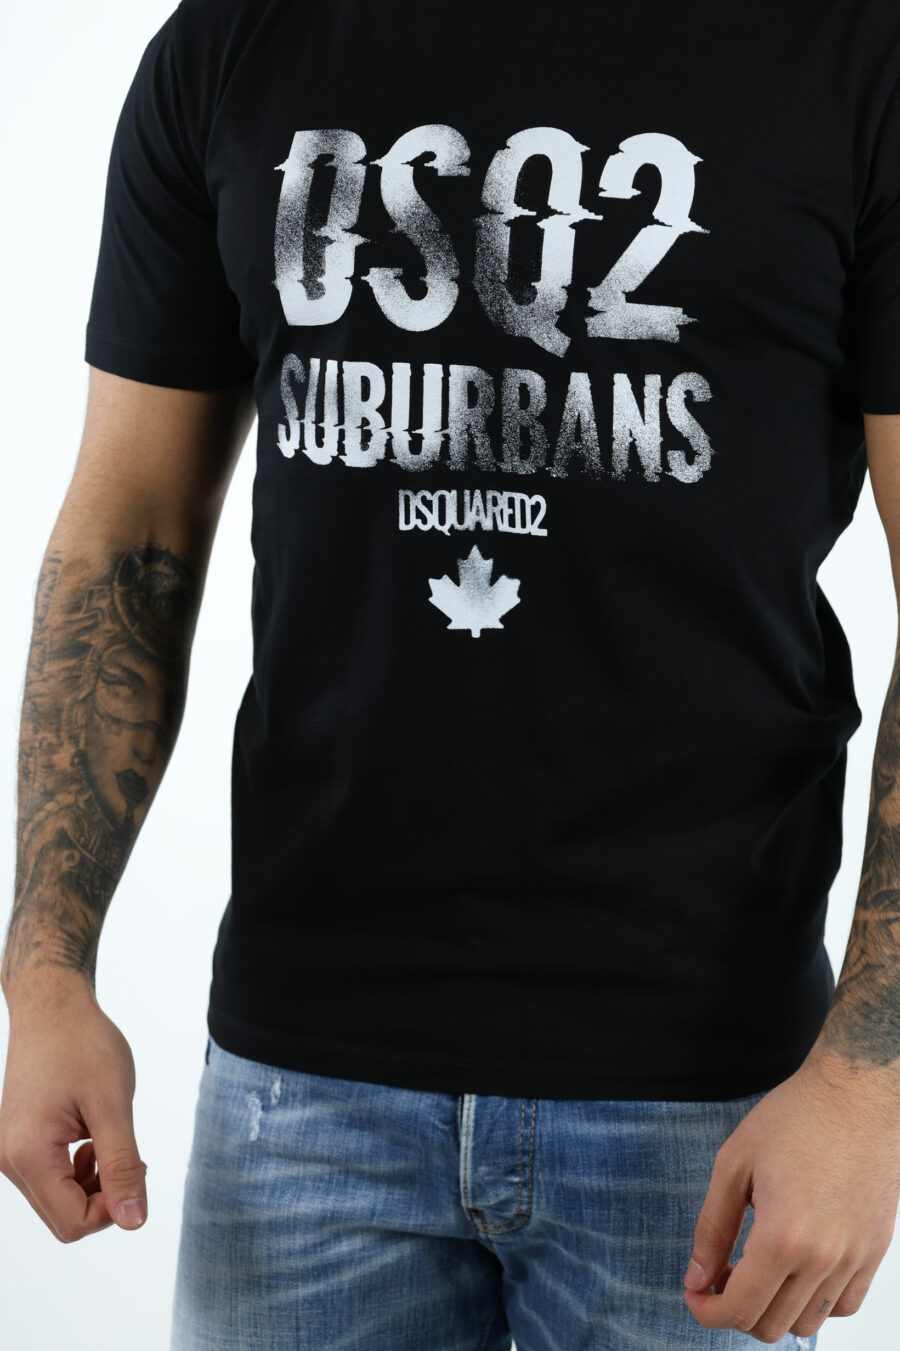 T-shirt noir avec maxilogo "suburbans" blanc - 106889